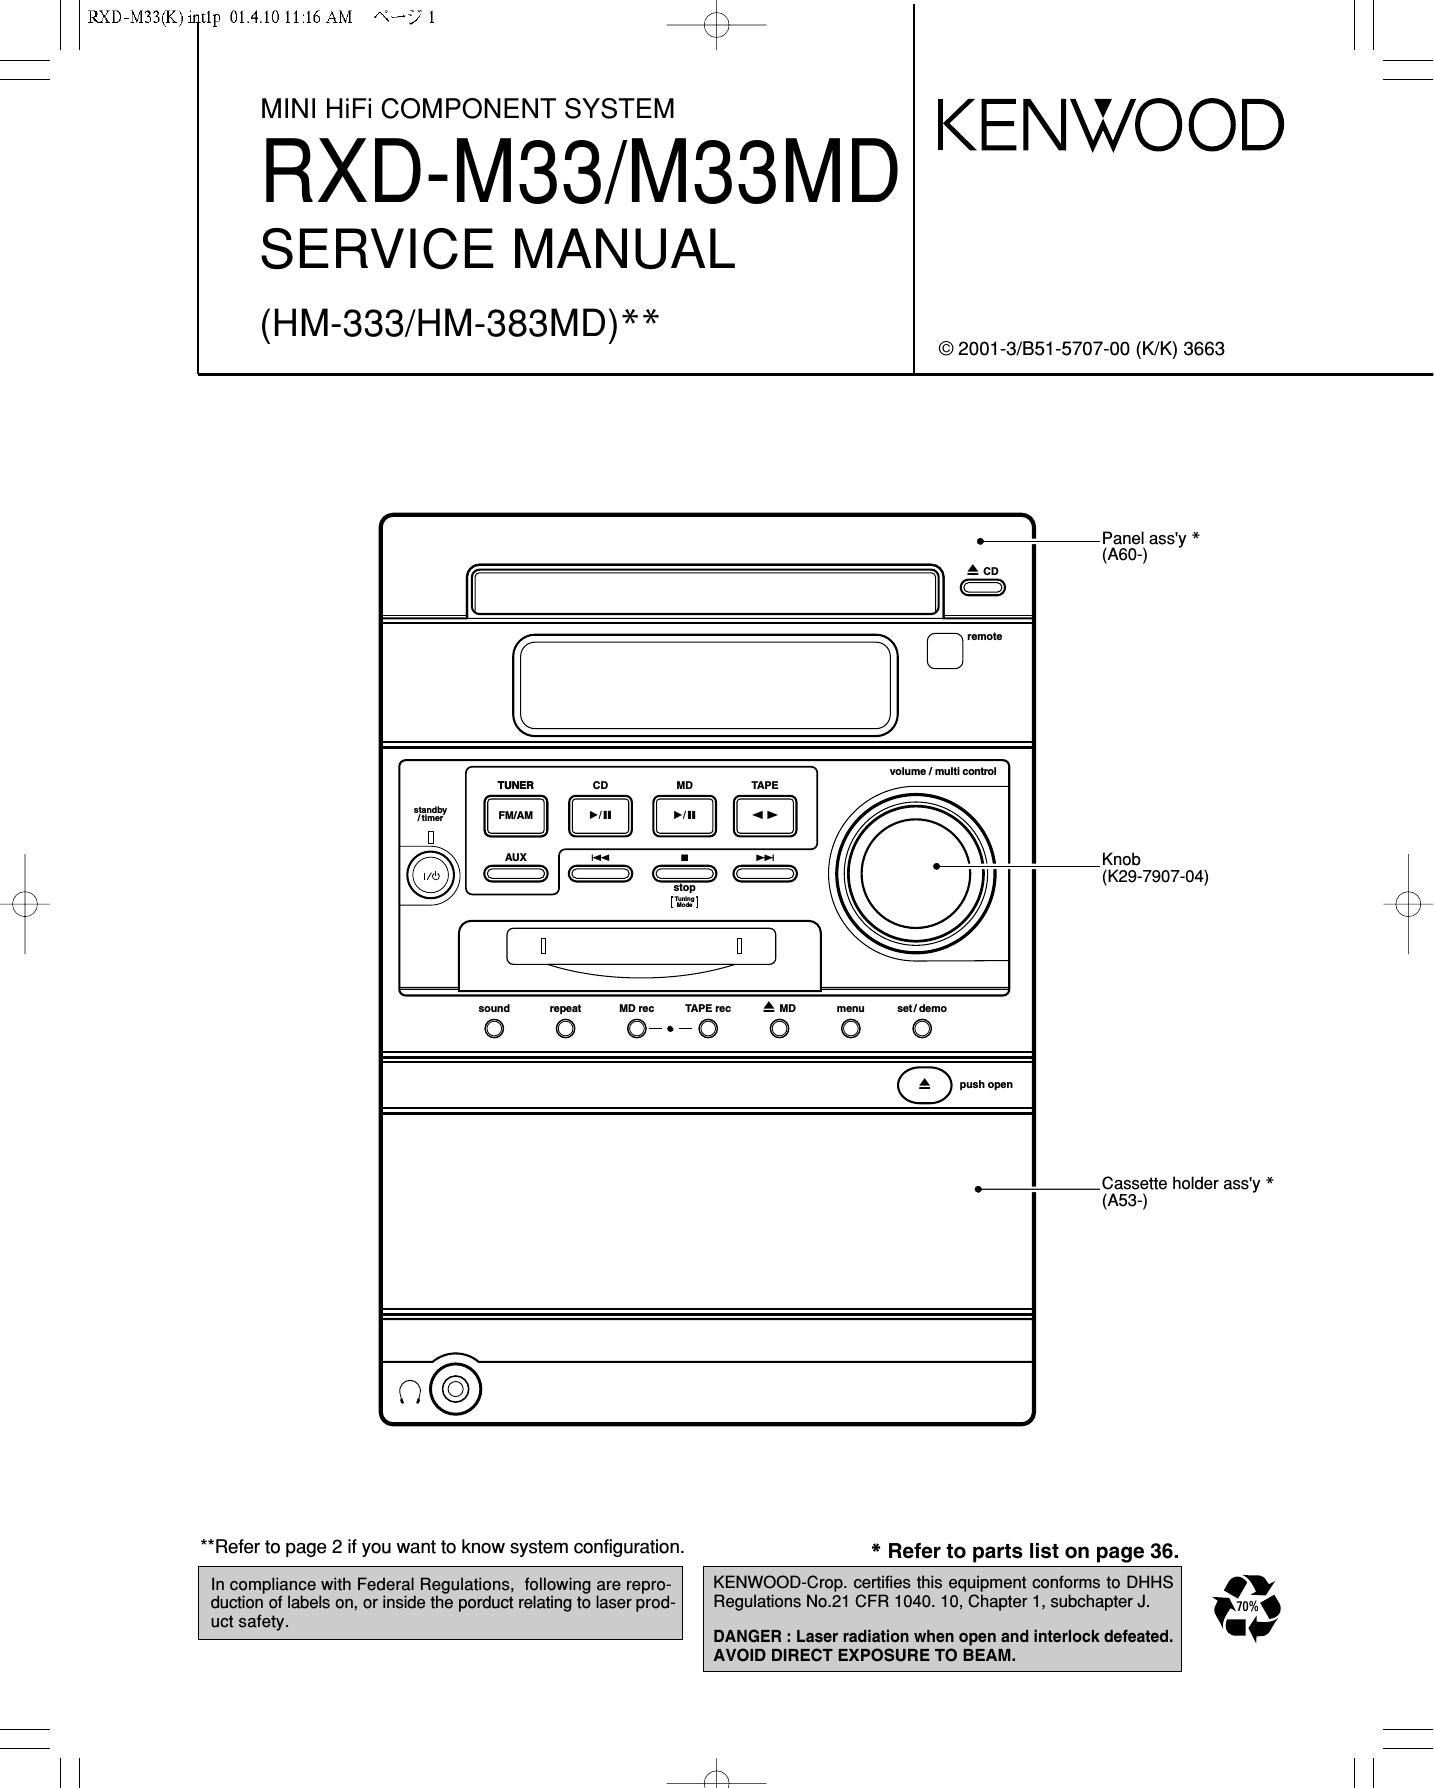 Kenwood HM 383 MD Service Manual